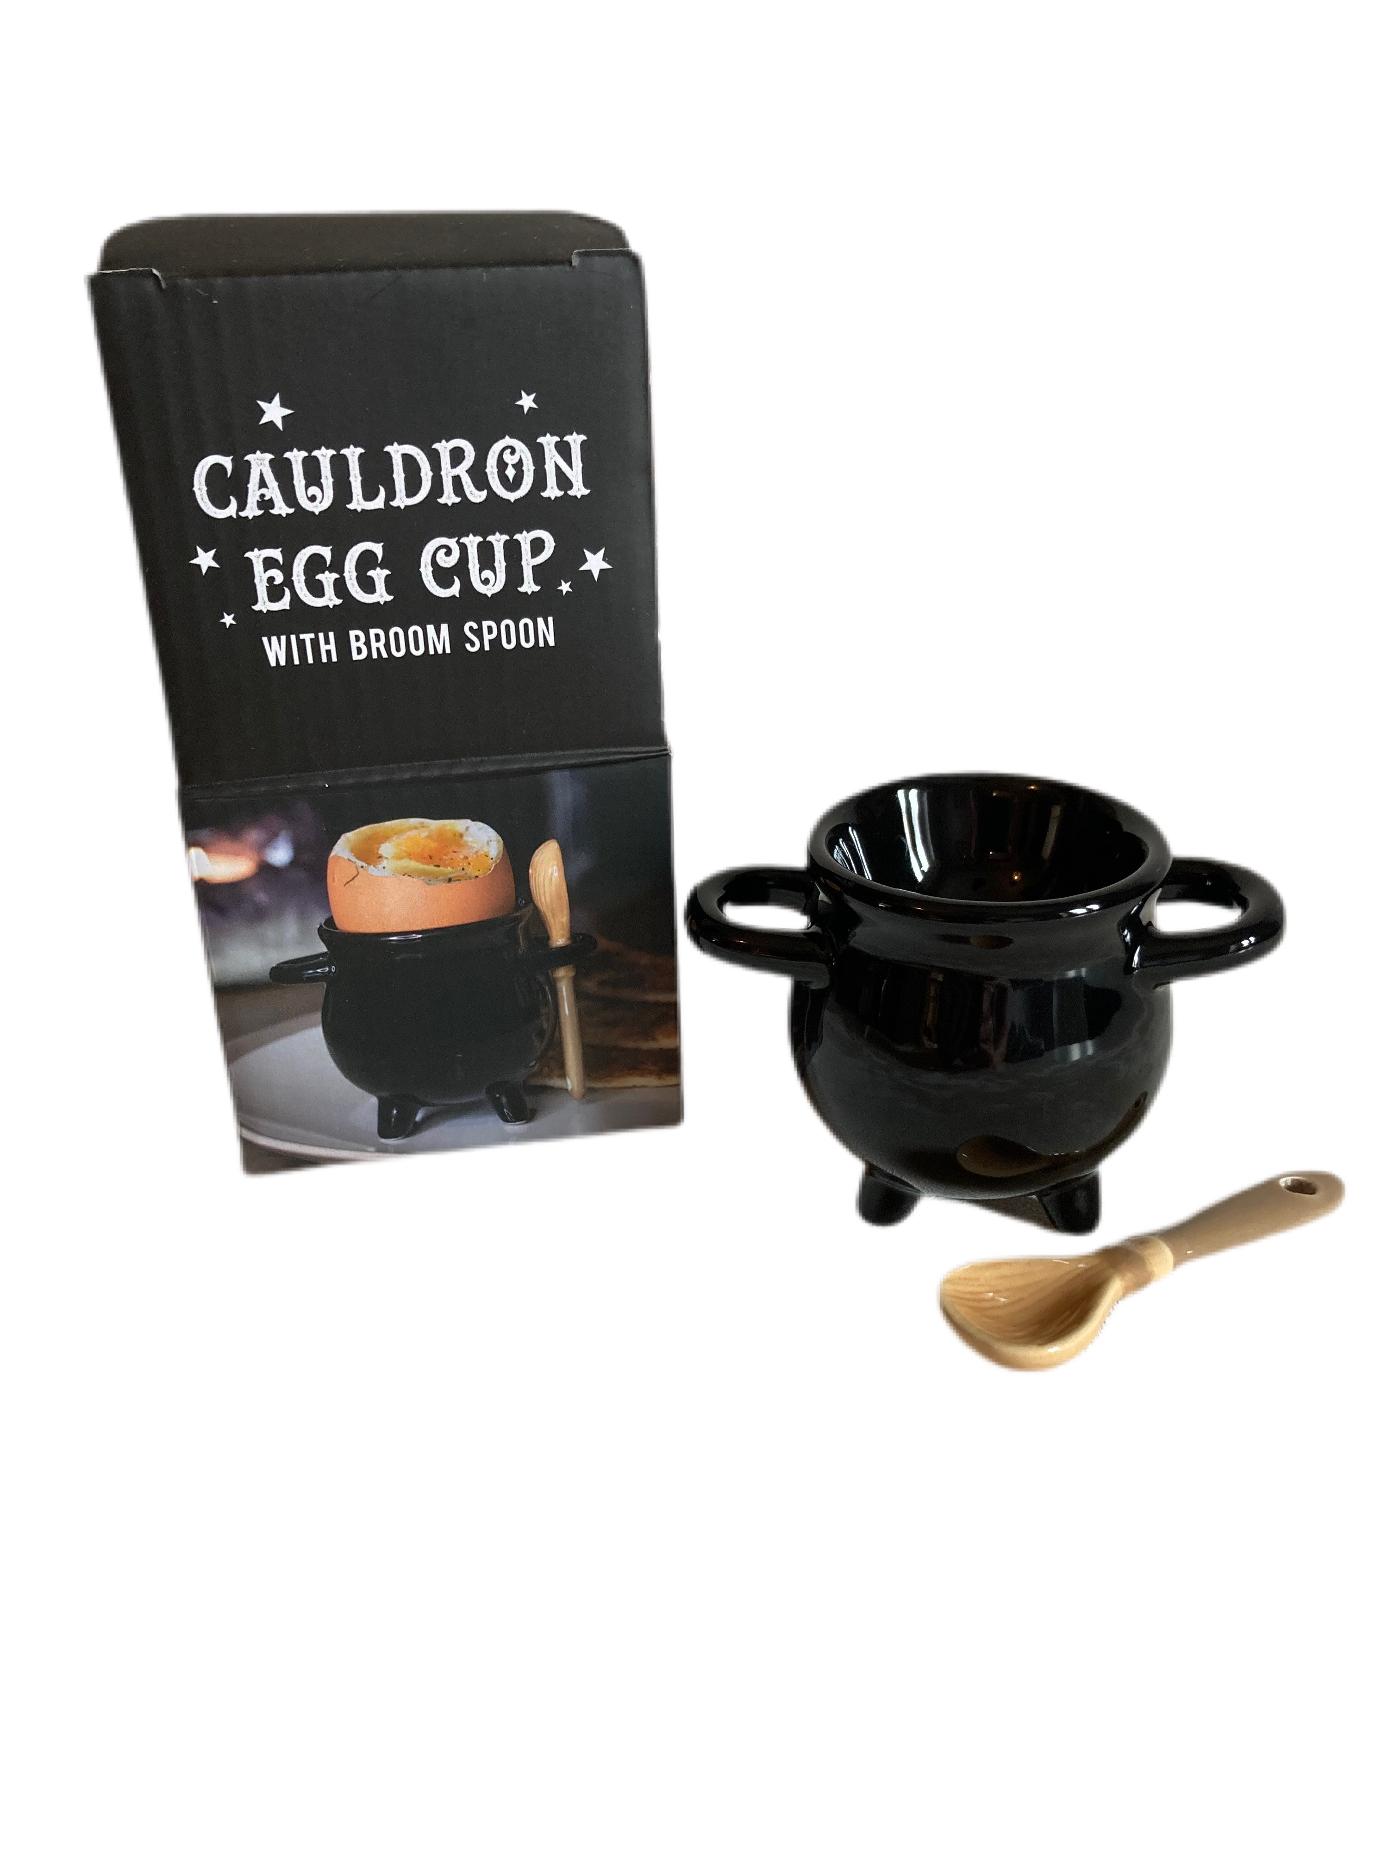 Cauldron Egg cup and broom spoon set